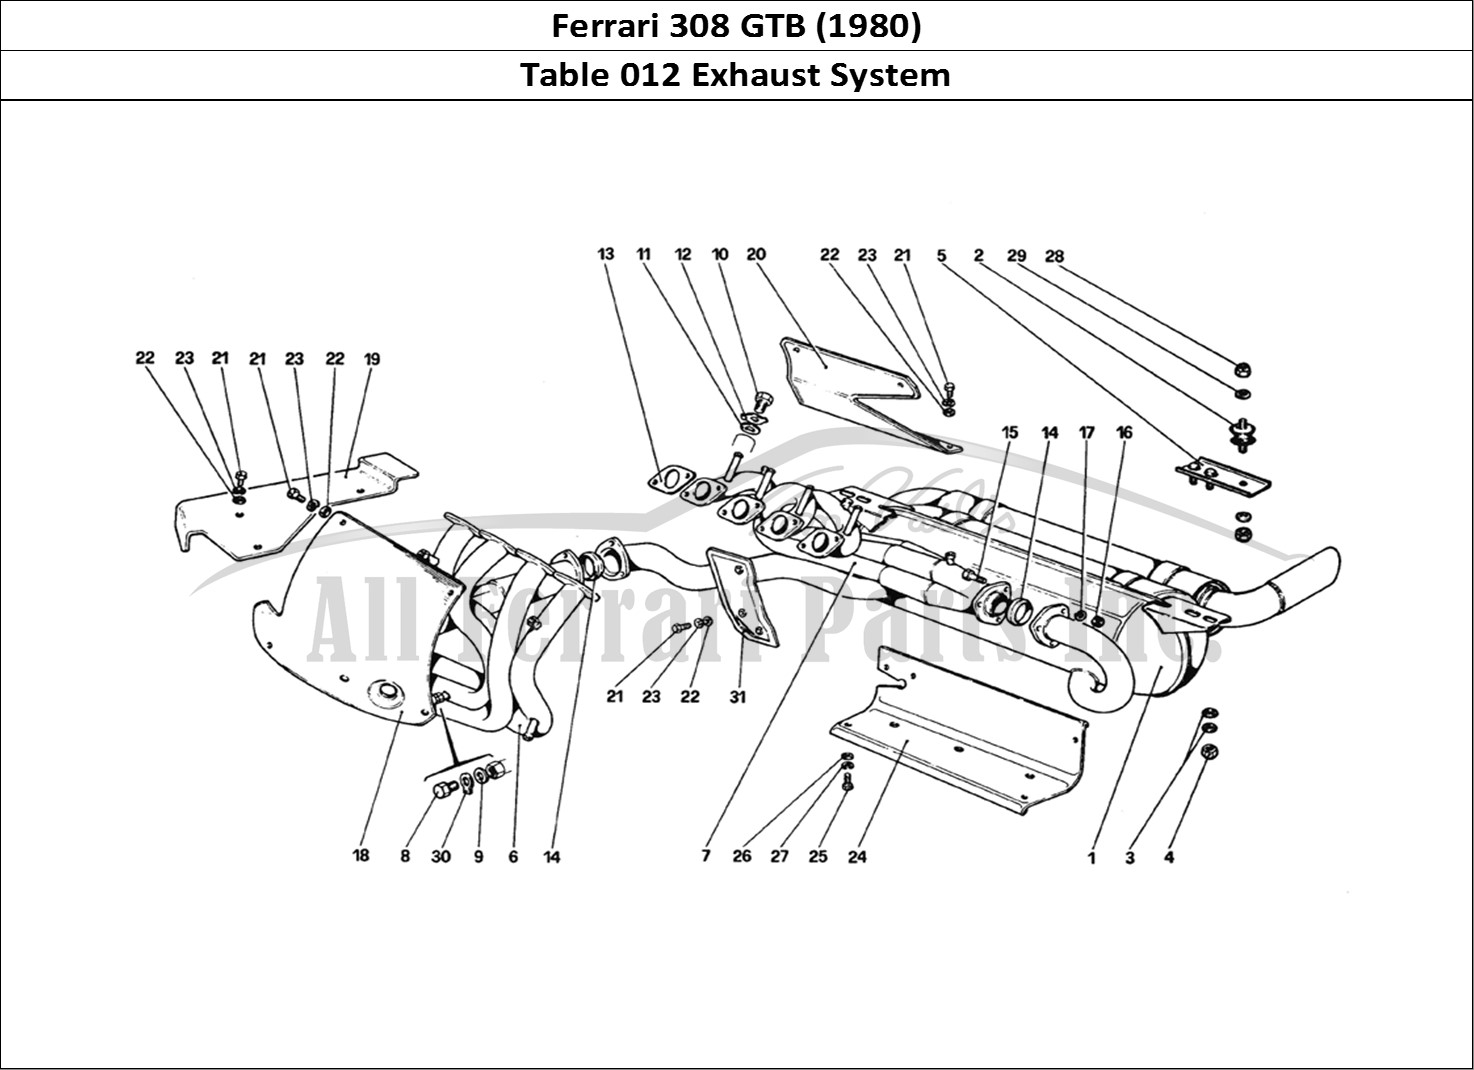 Ferrari Parts Ferrari 308 GTB (1980) Page 012 Exhaust System